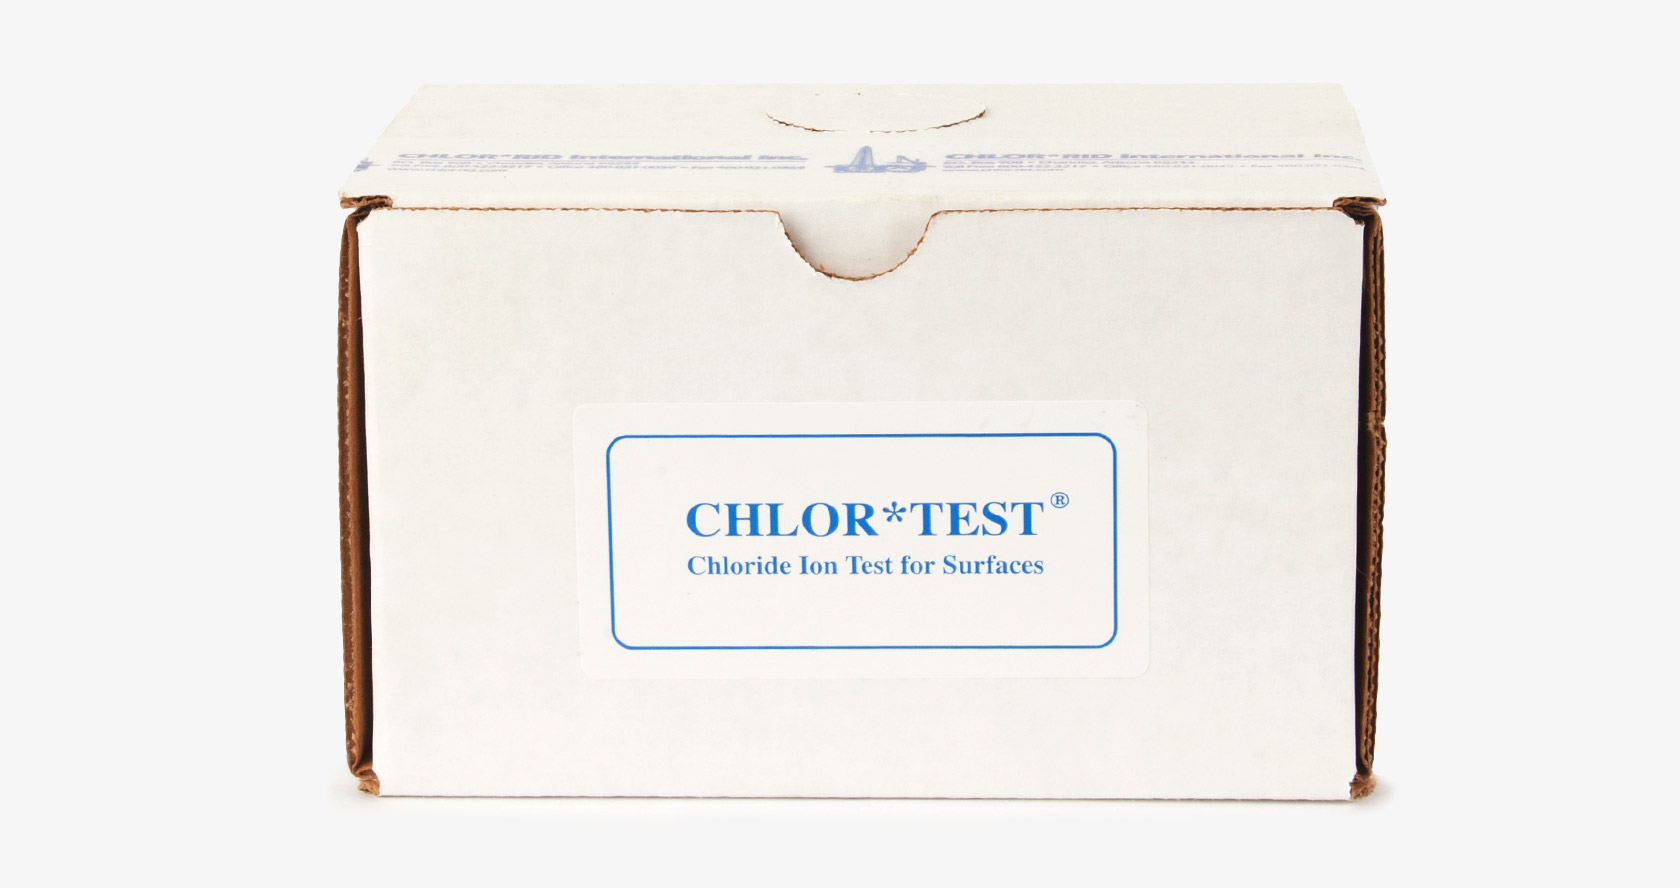 Shaw Chloride Test Kits